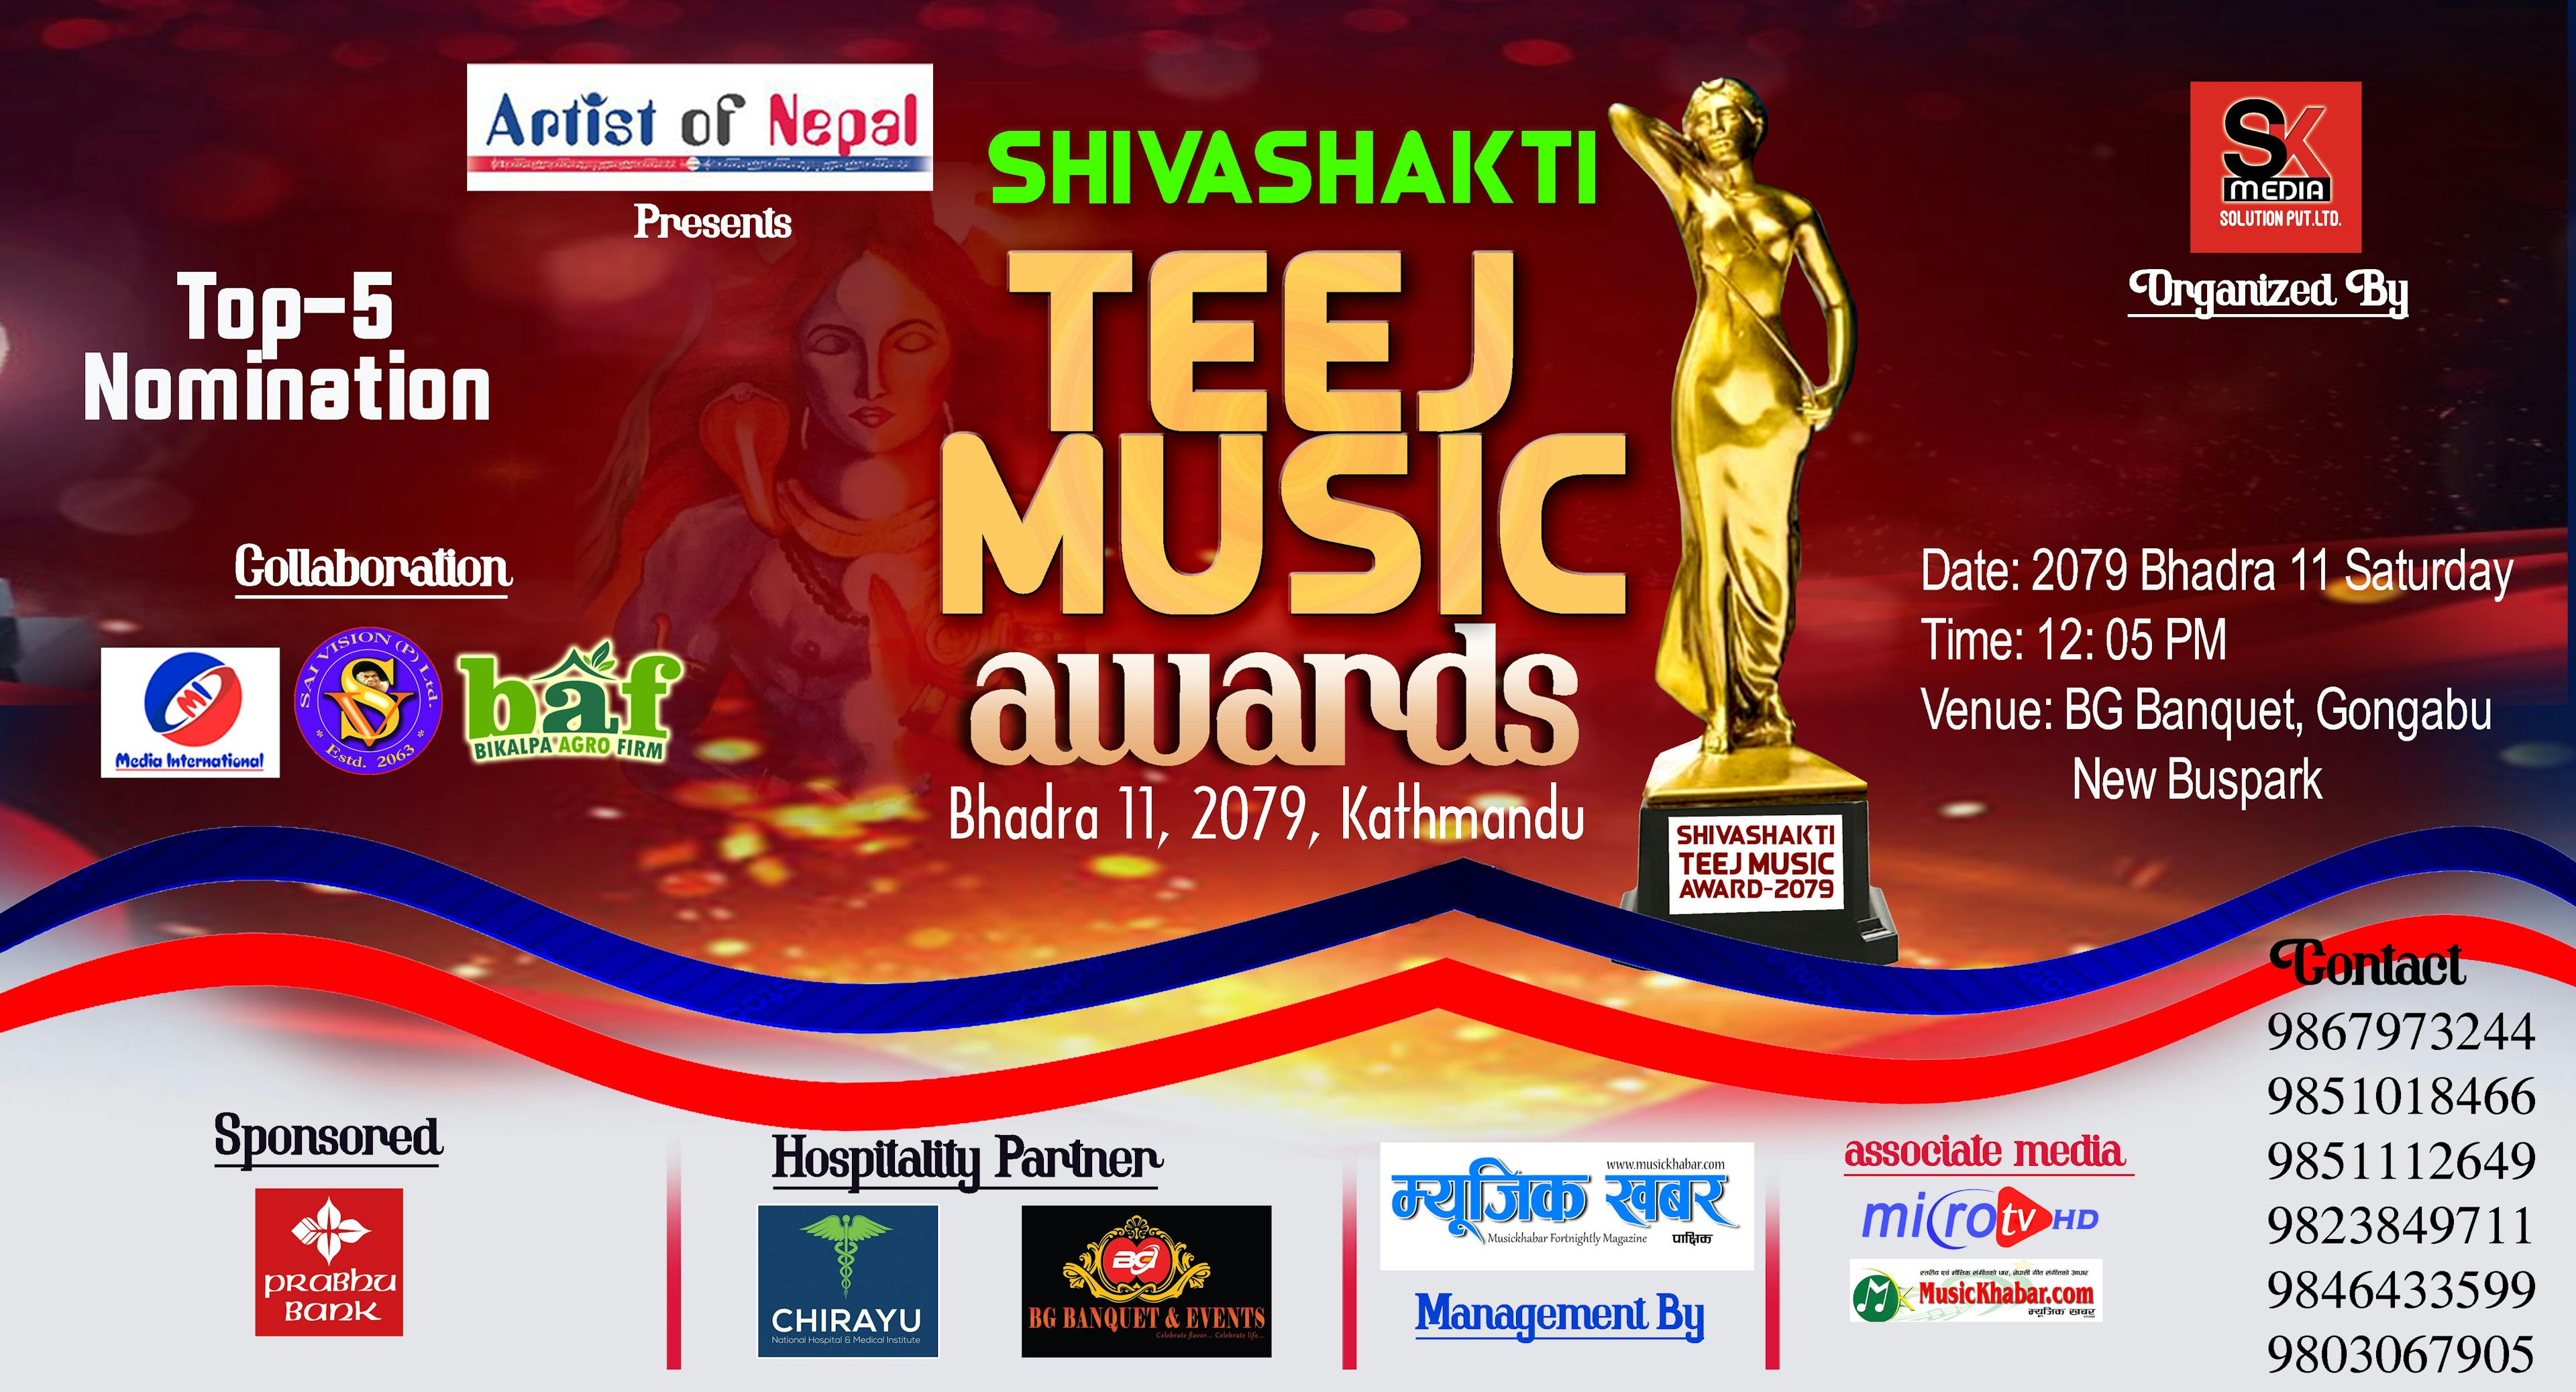 Shivshakti Teej Music Awards 2079 Best Five Nominations Announced